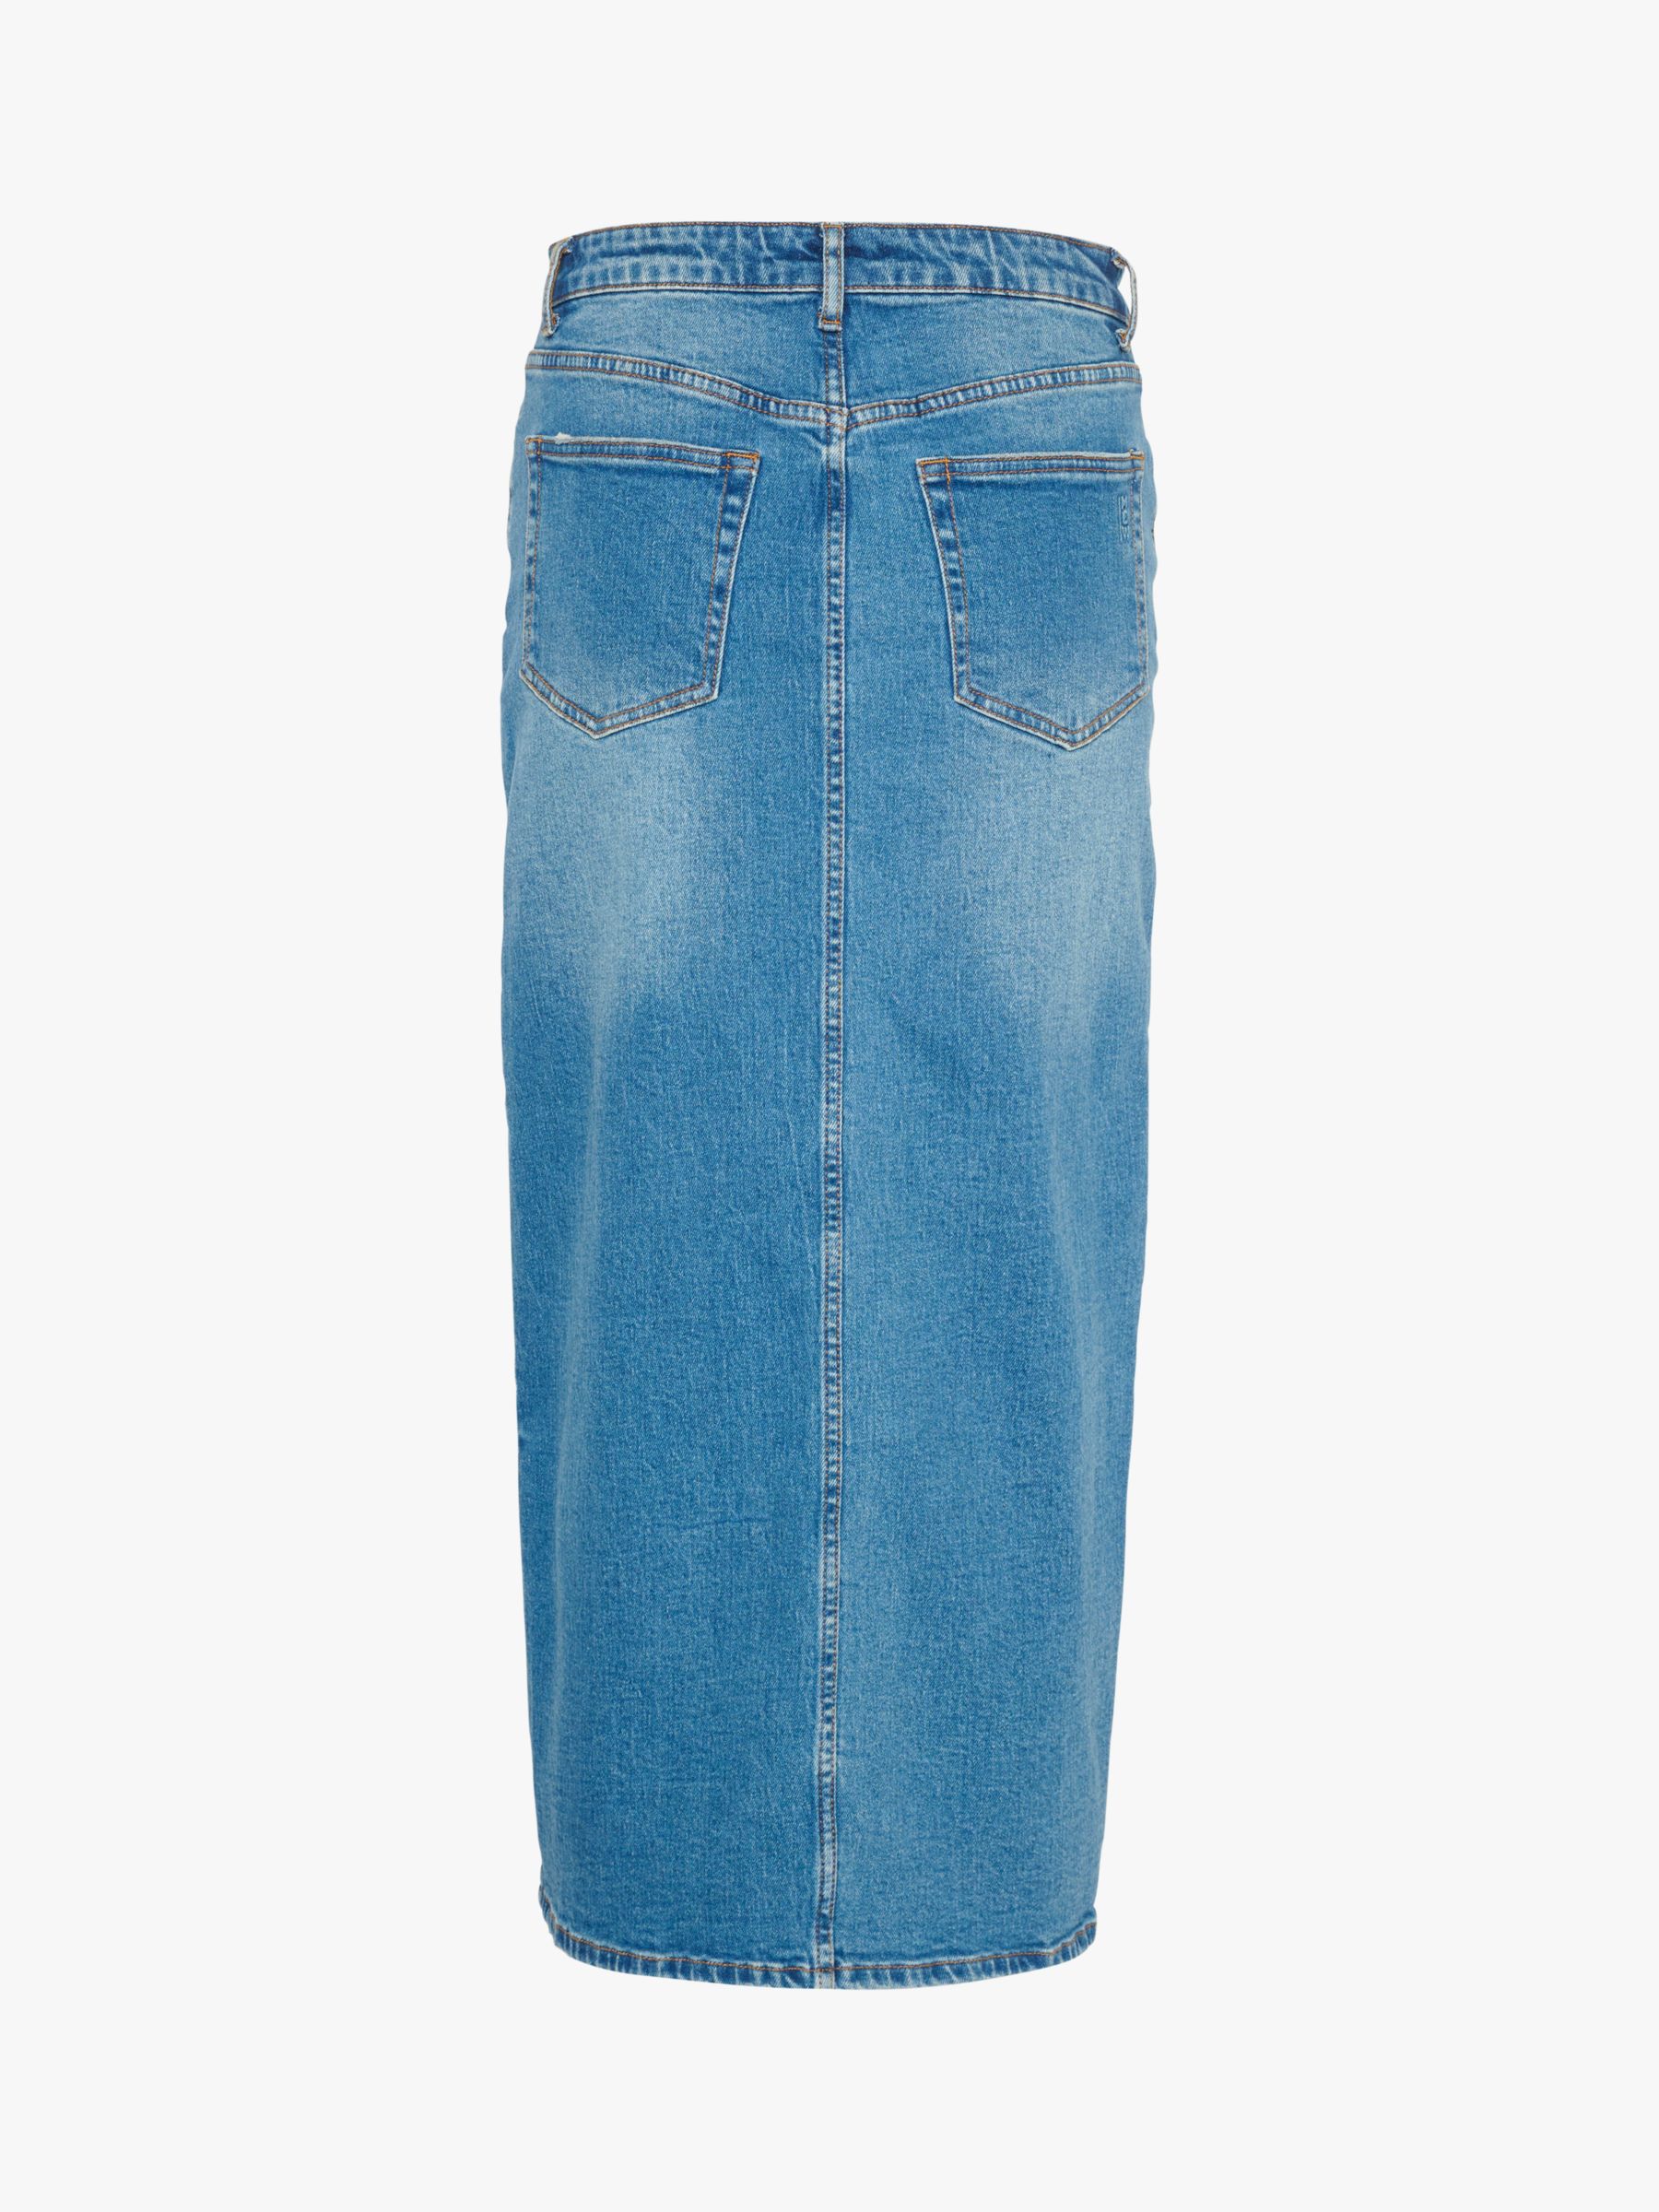 MY ESSENTIAL WARDROBE Dango Straight Fit Denim Maxi Skirt, Medium Blue Wash, 8